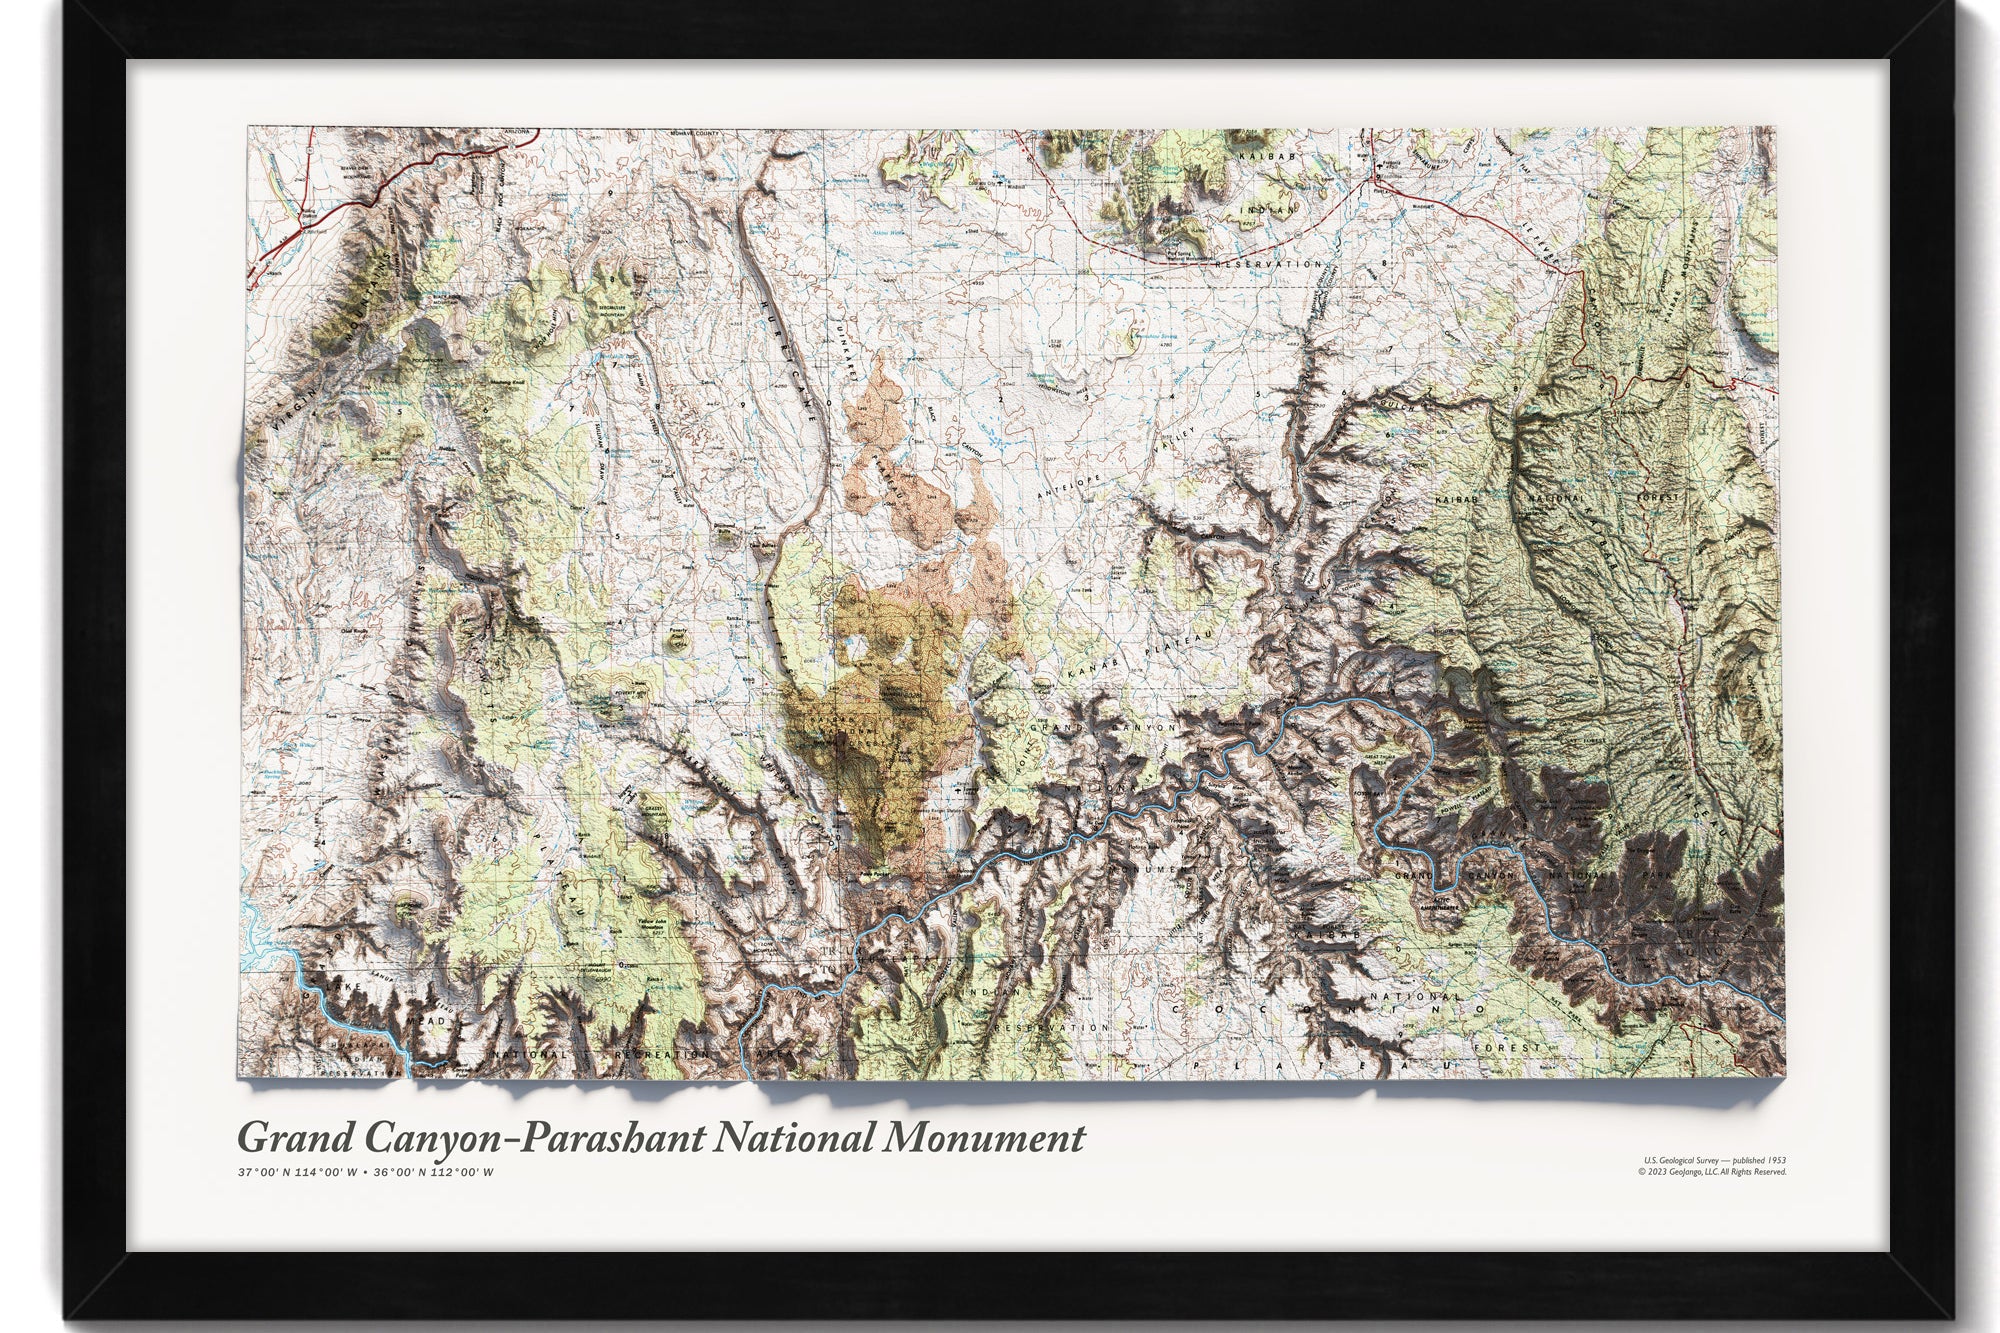 USGS topo map grand canyon 3d